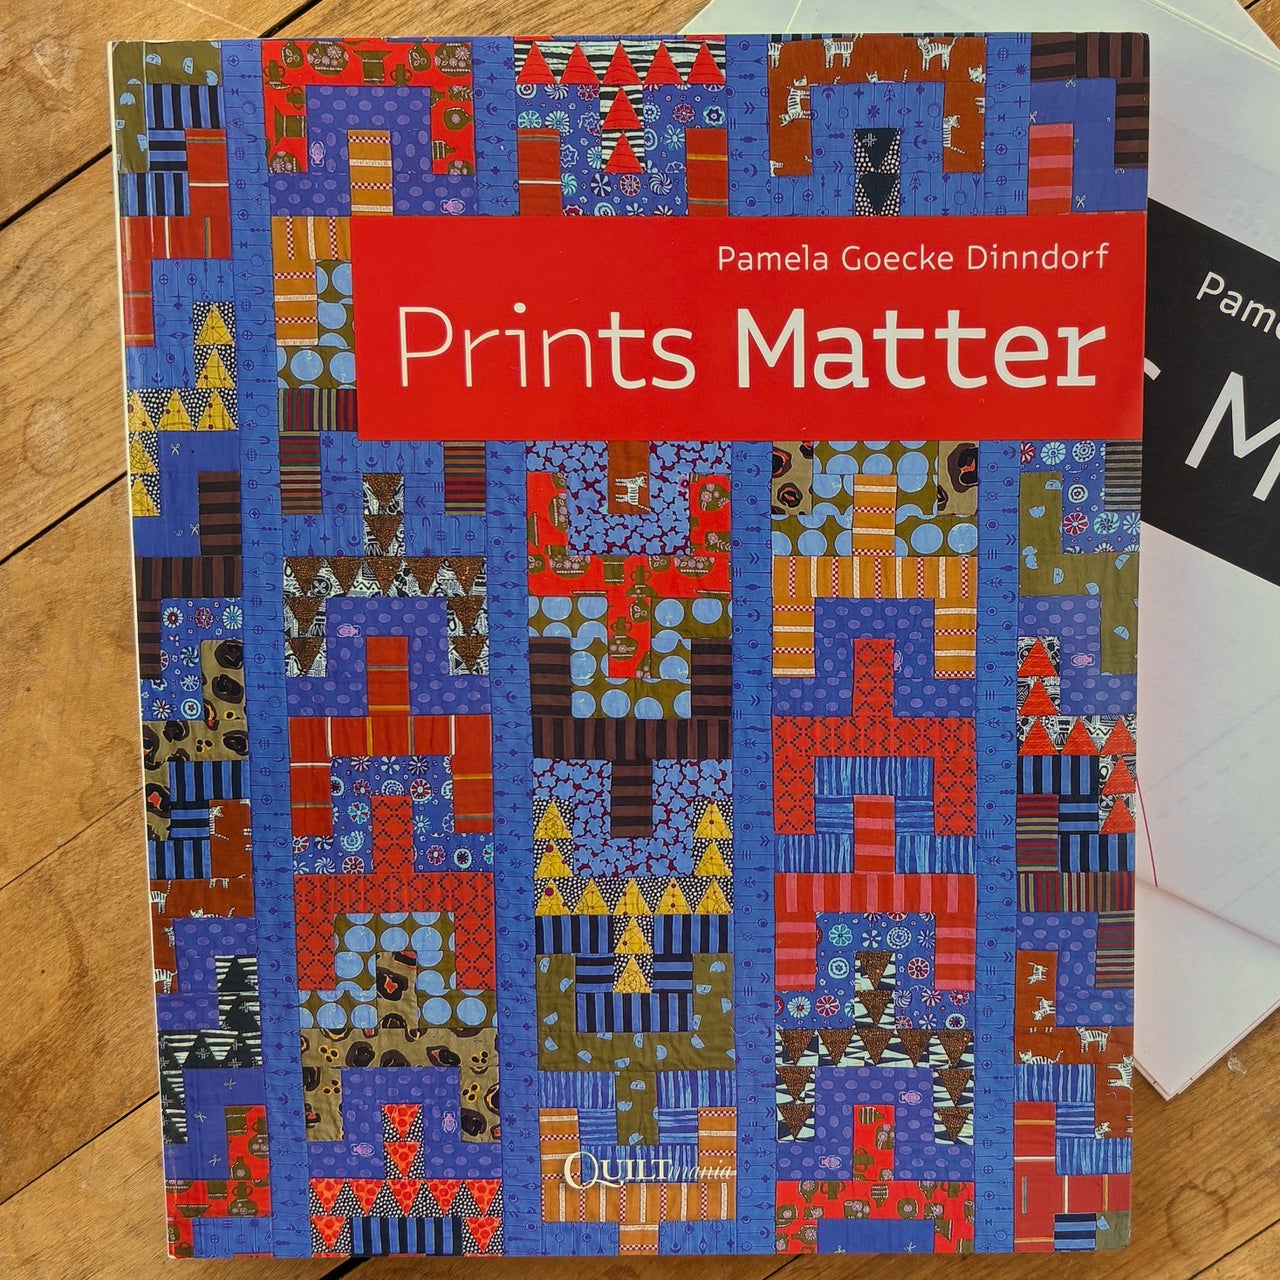 Prints Matter by Pamela Goecke Dinndorf